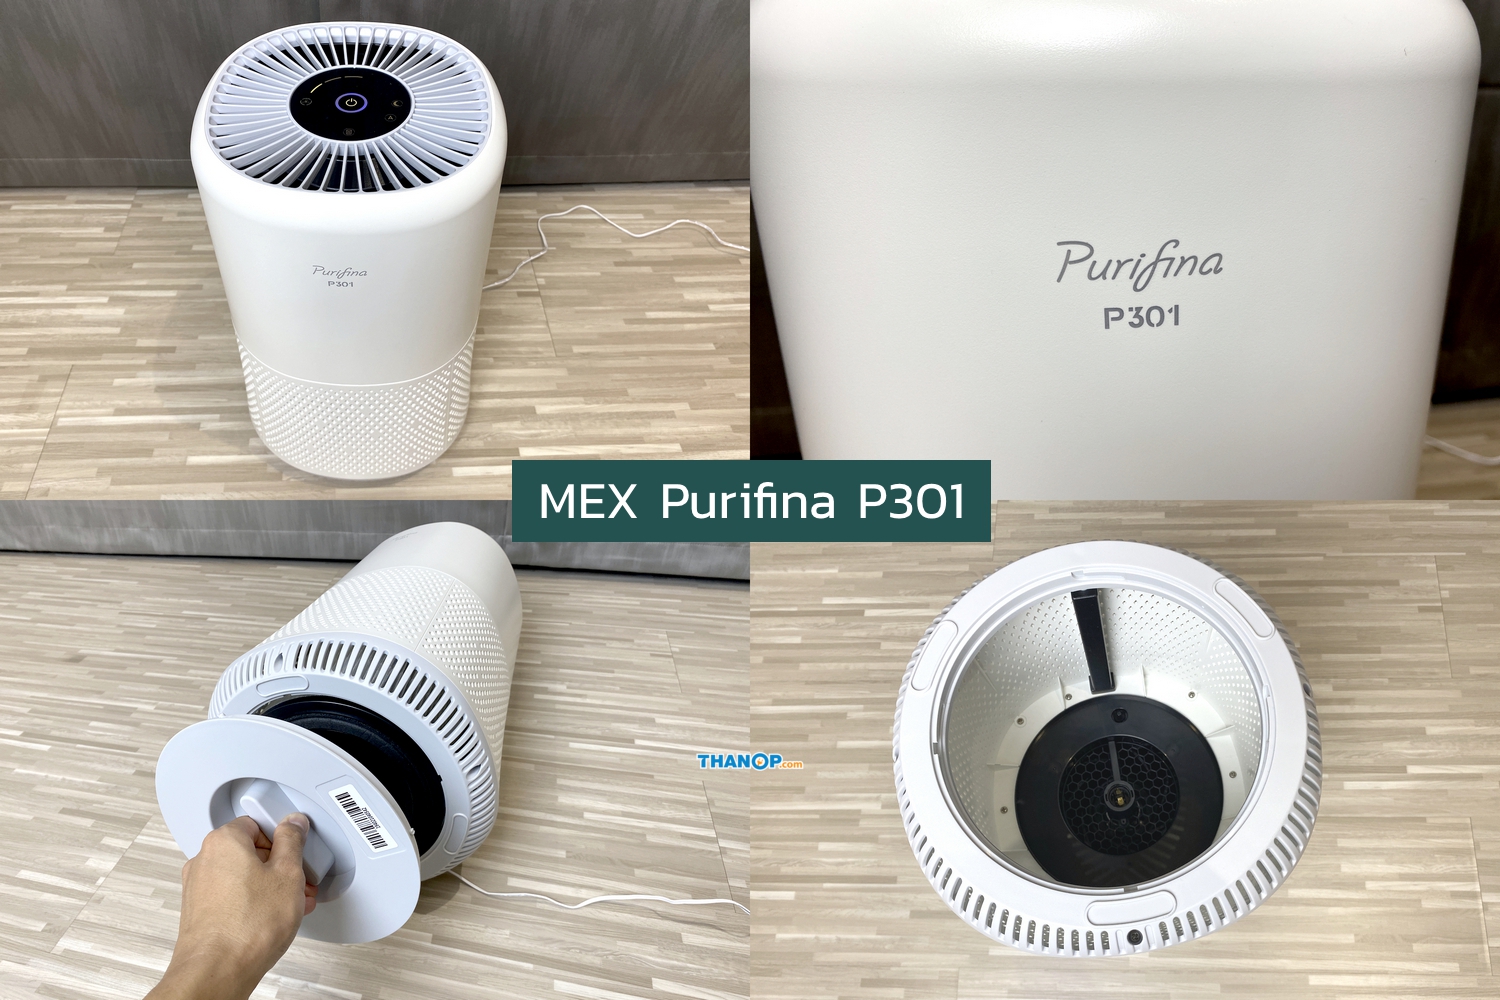 mex-purifina-p301-body-view-all